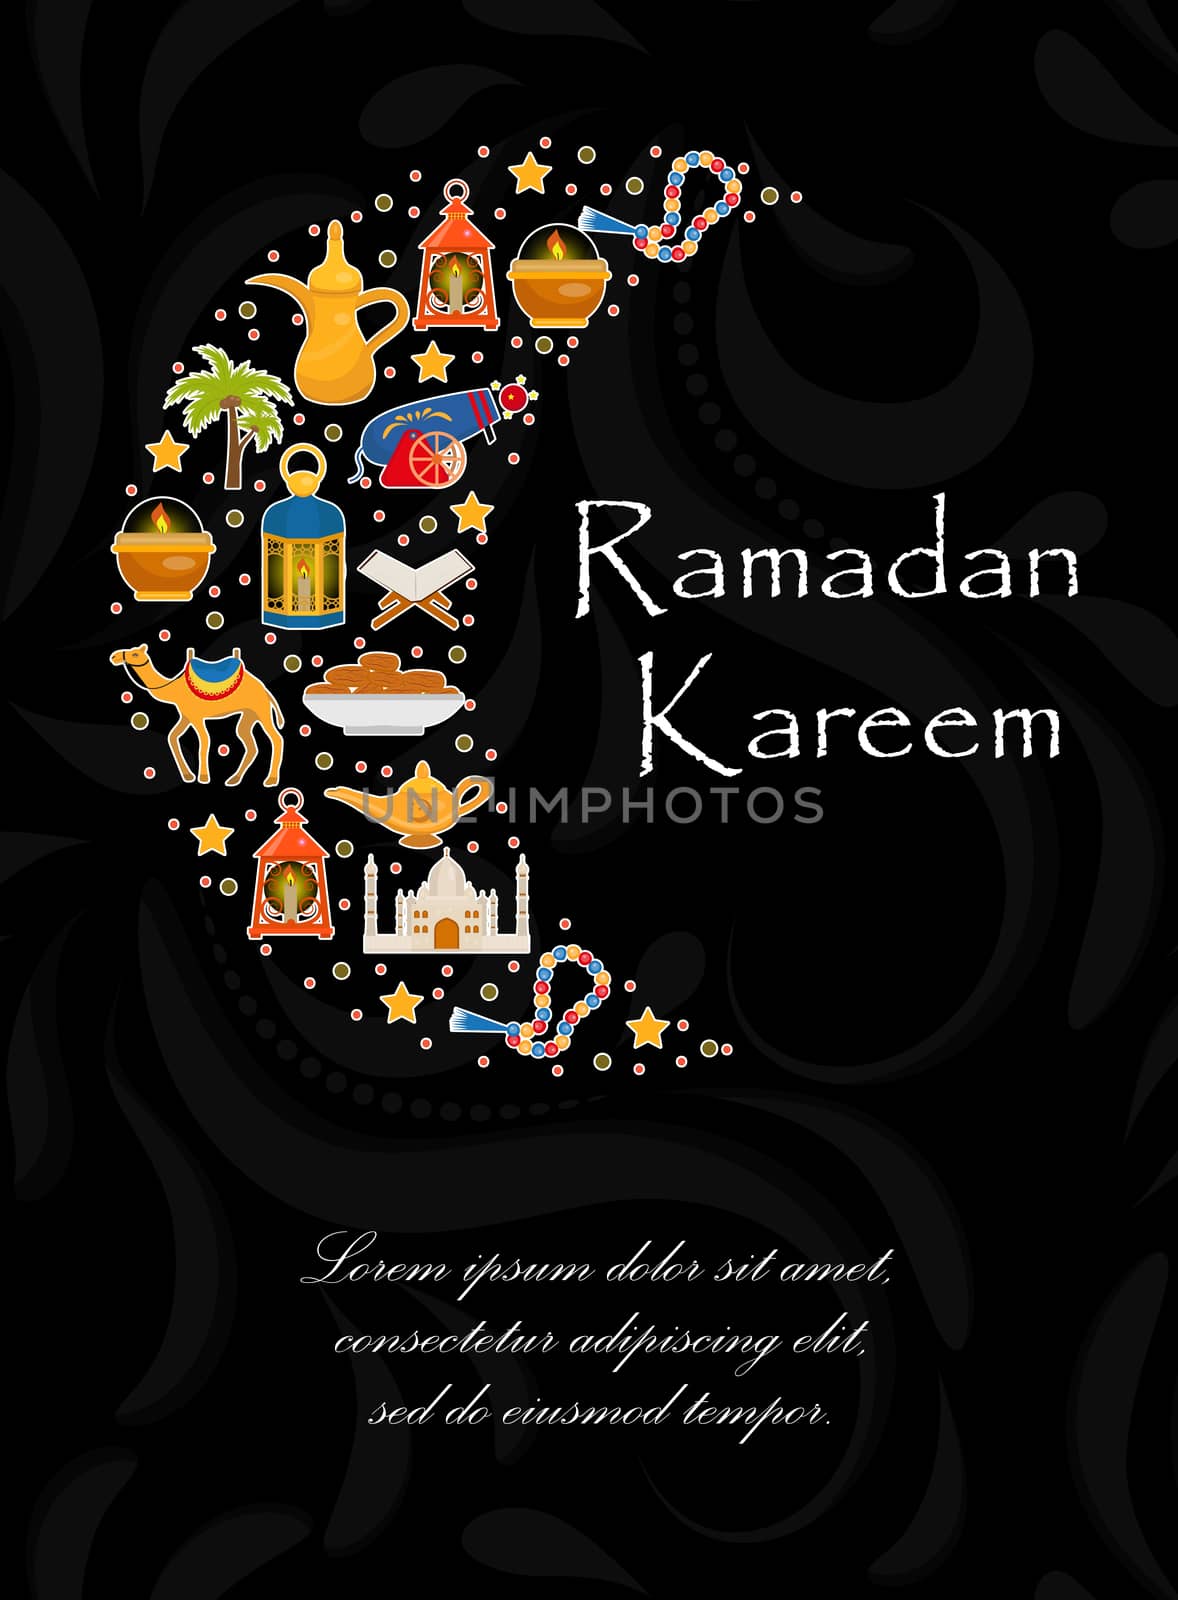 Ramadan kareem greeting card with arabic design elements camel, quran, lanterns, rosary, food, mosque. illustration